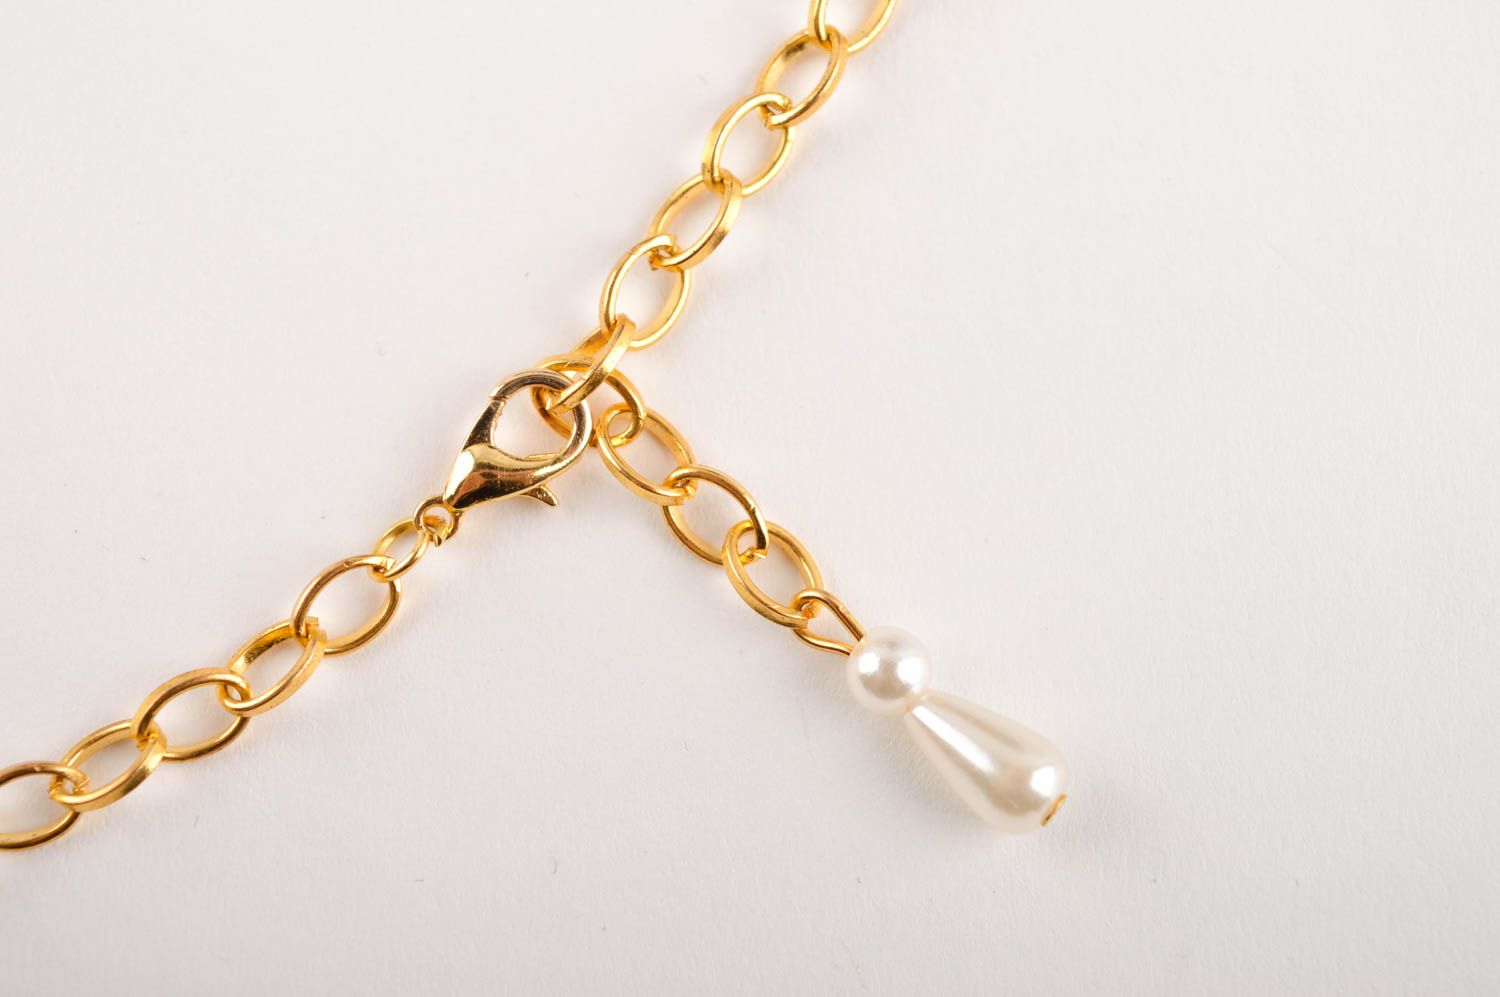 Handmade necklace stylish accessory designer jewelry present for women photo 4